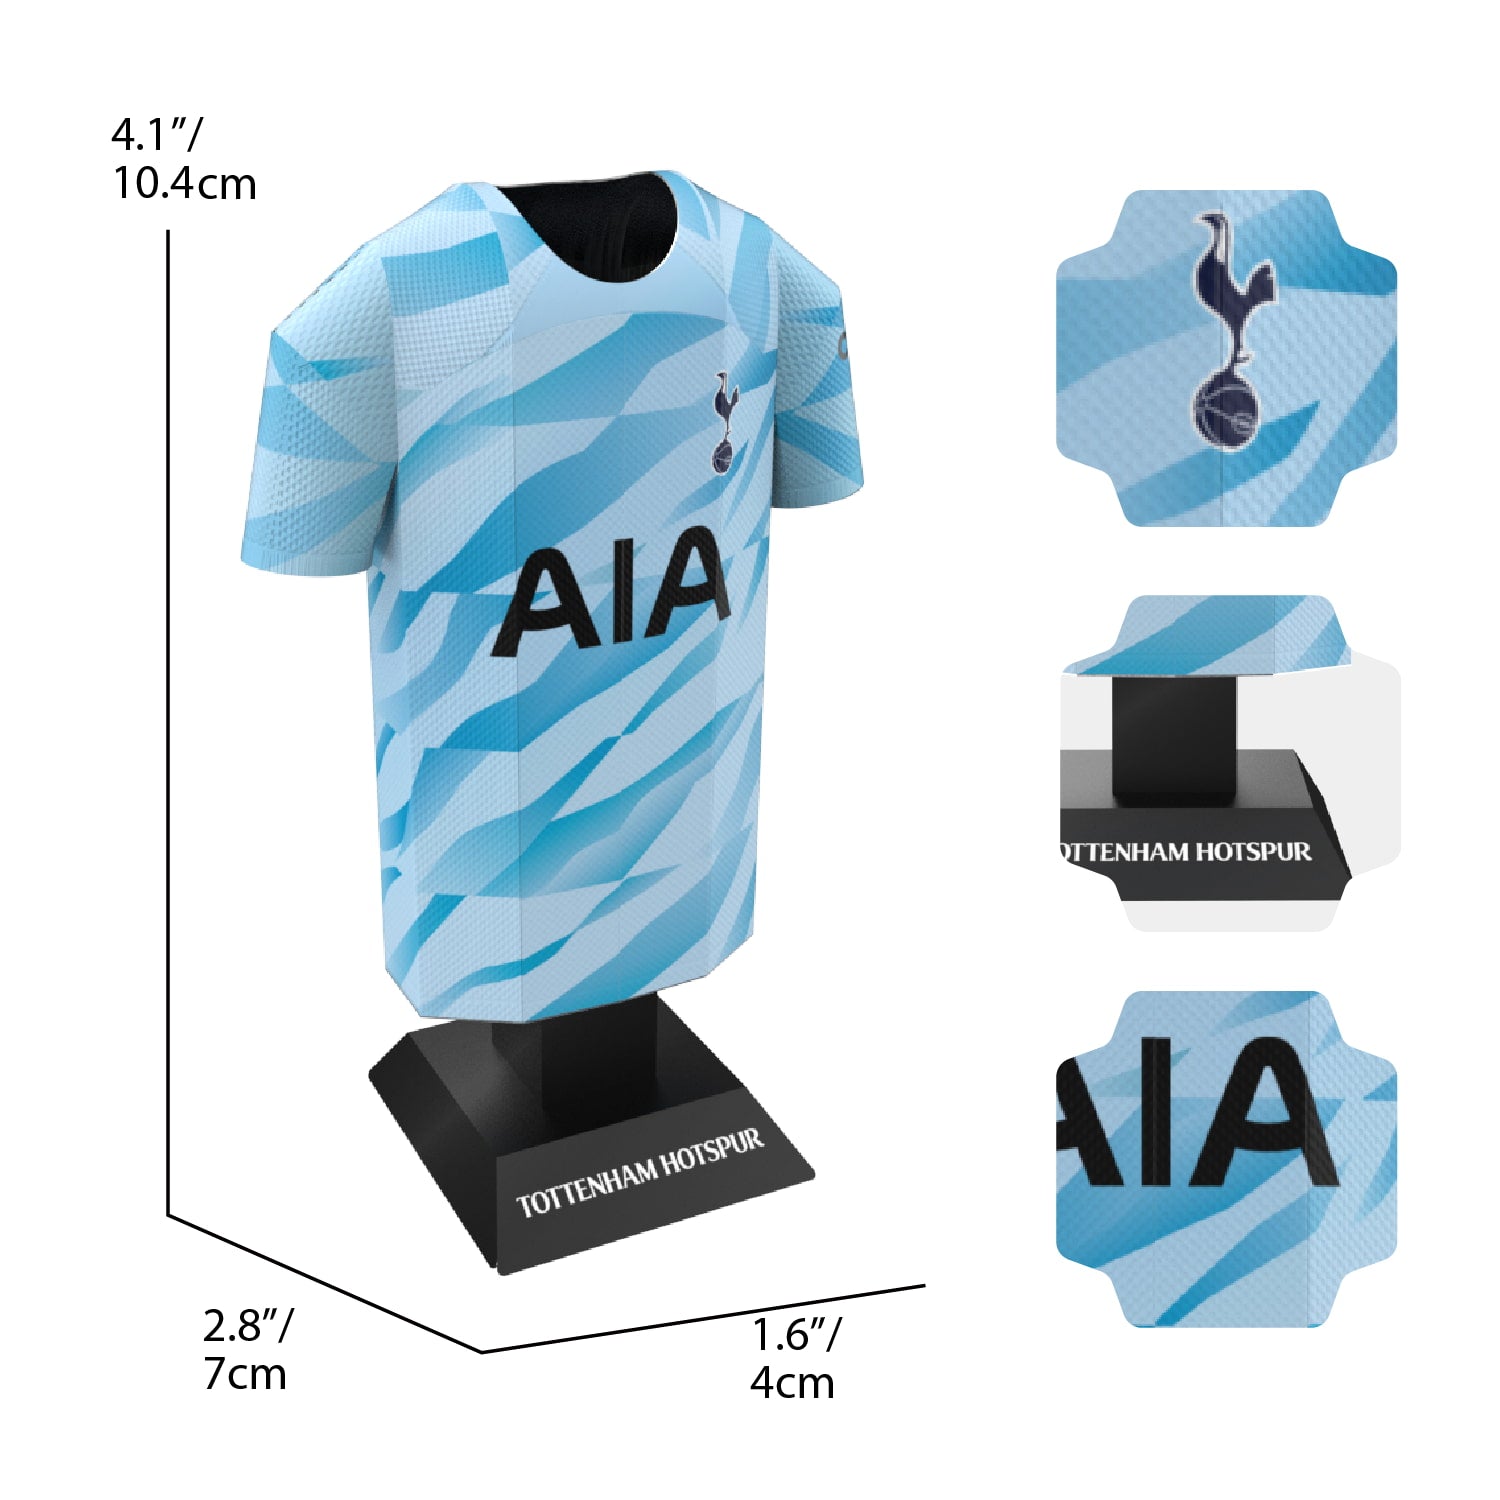 Tottenham goalkeeper kit dimensions